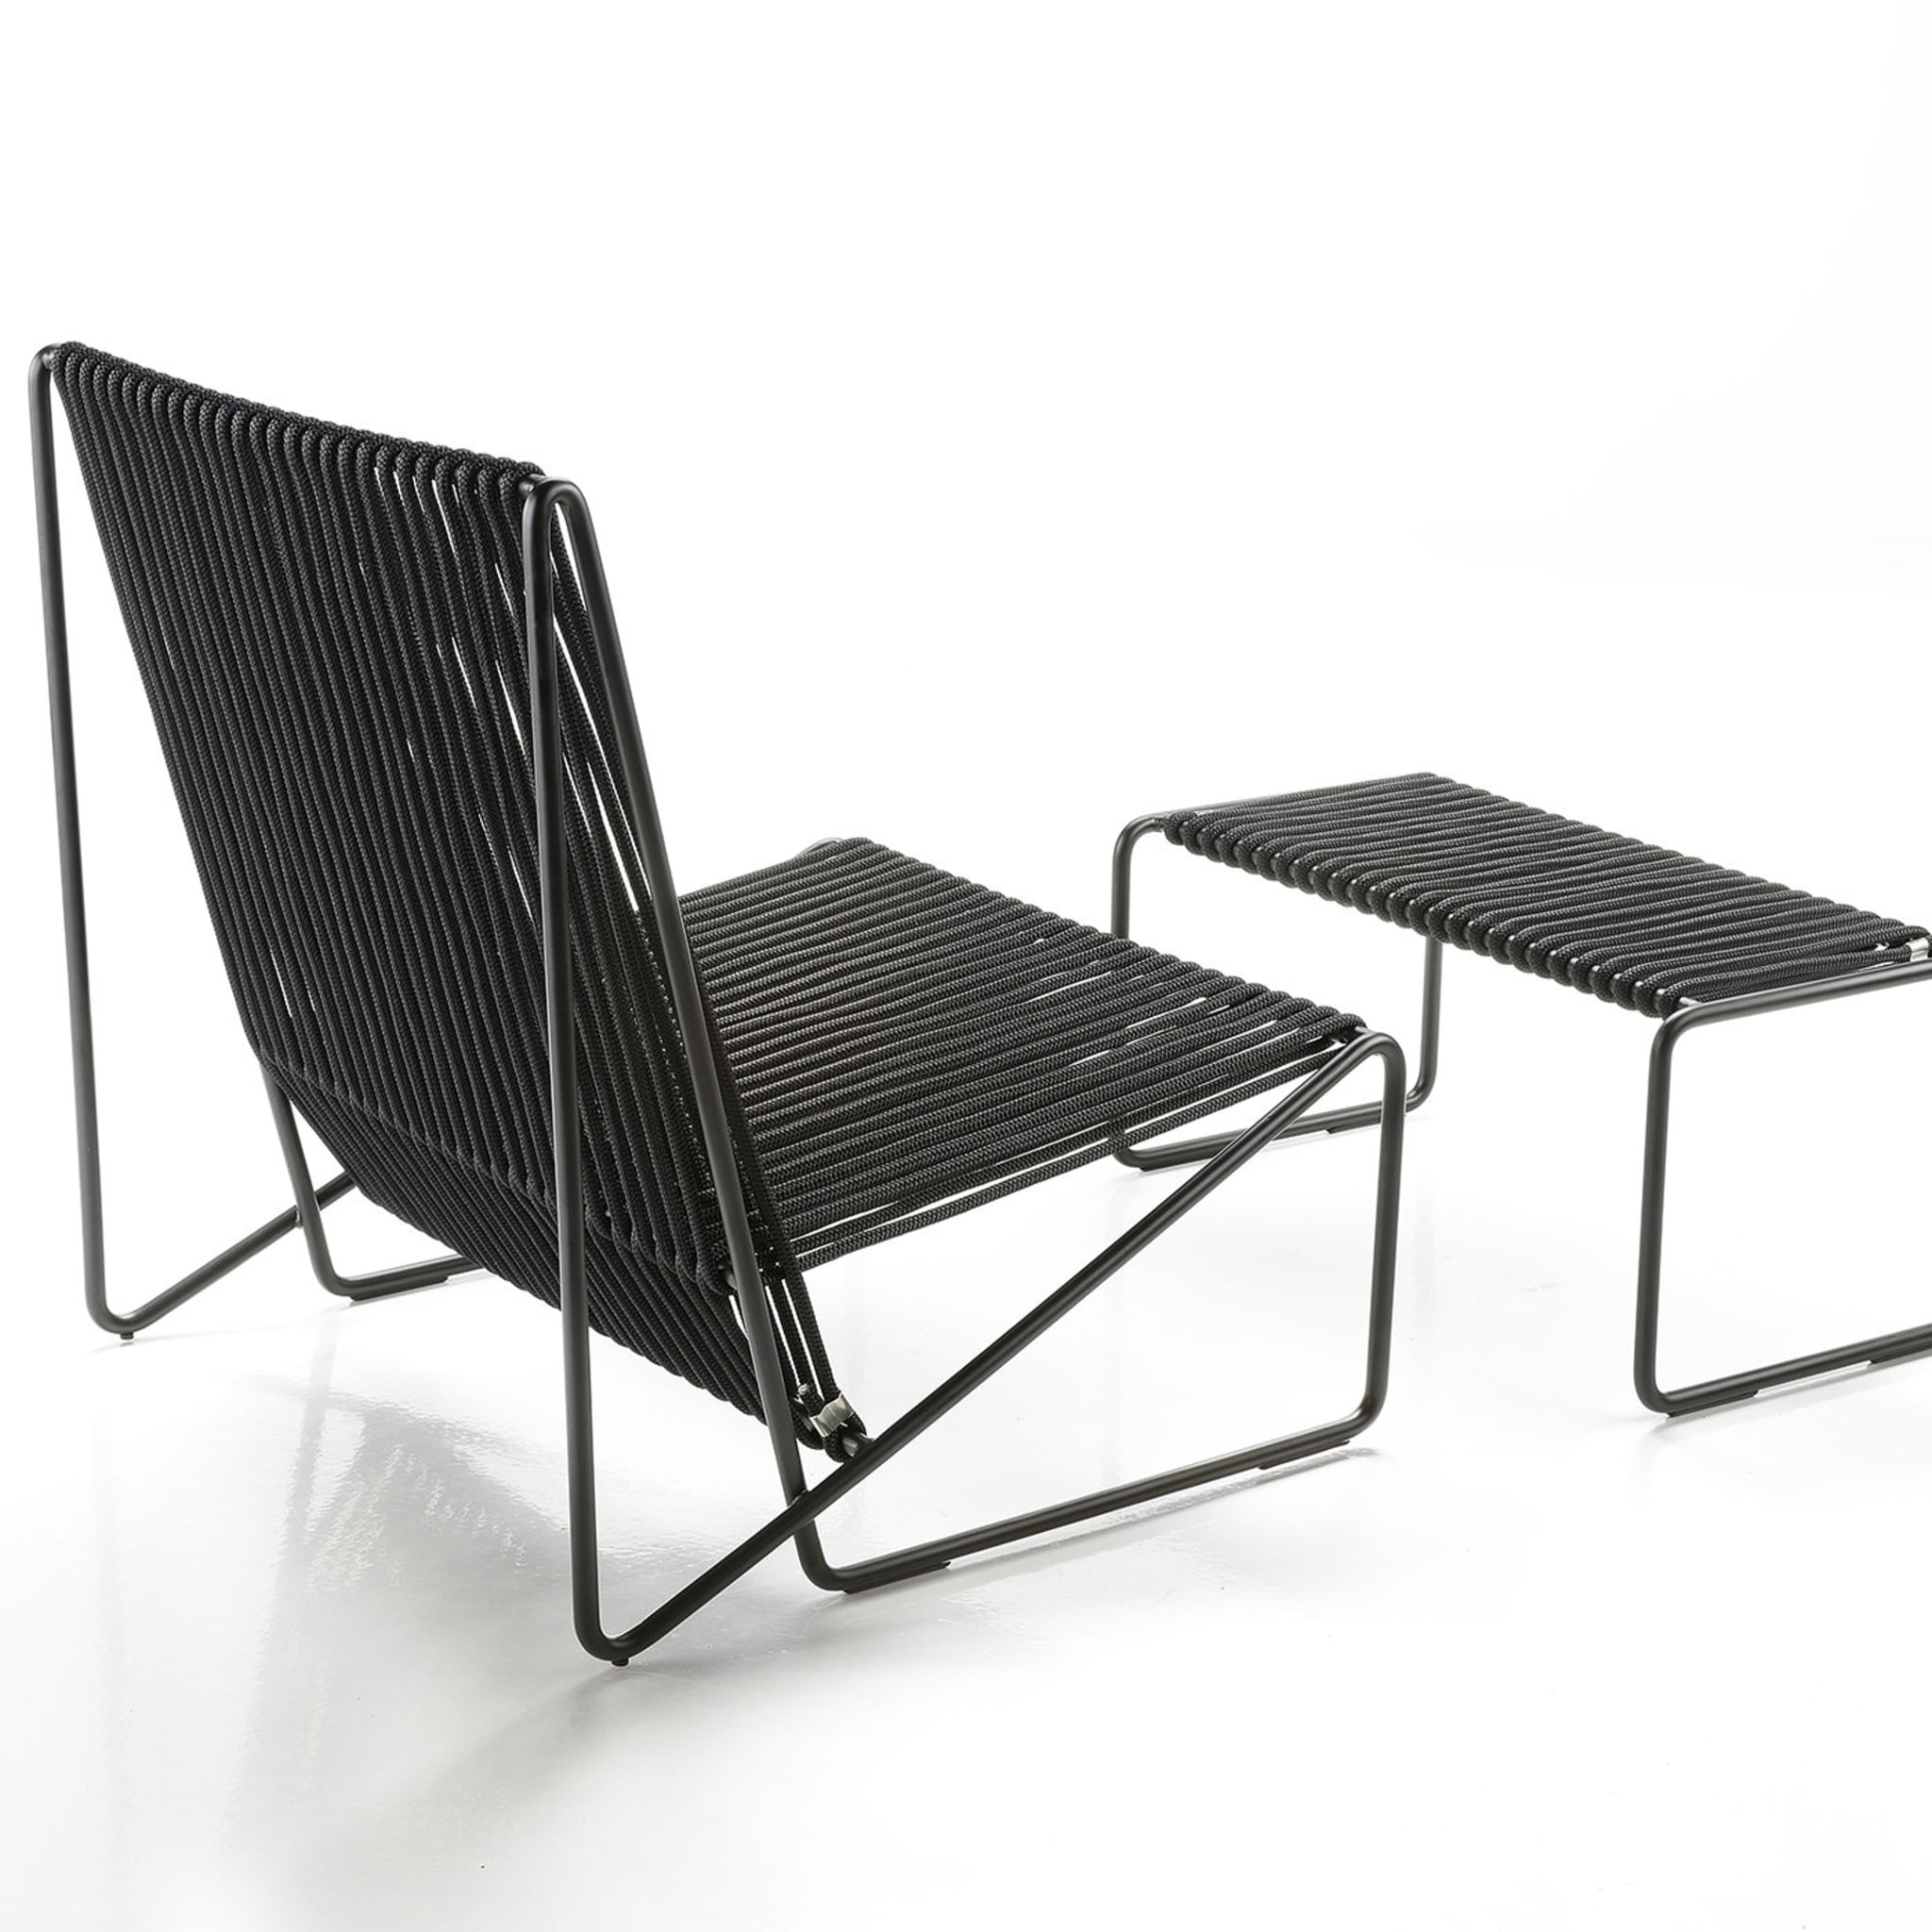 Rada Lounge Chair by Stefano Esposito - Alternative view 5